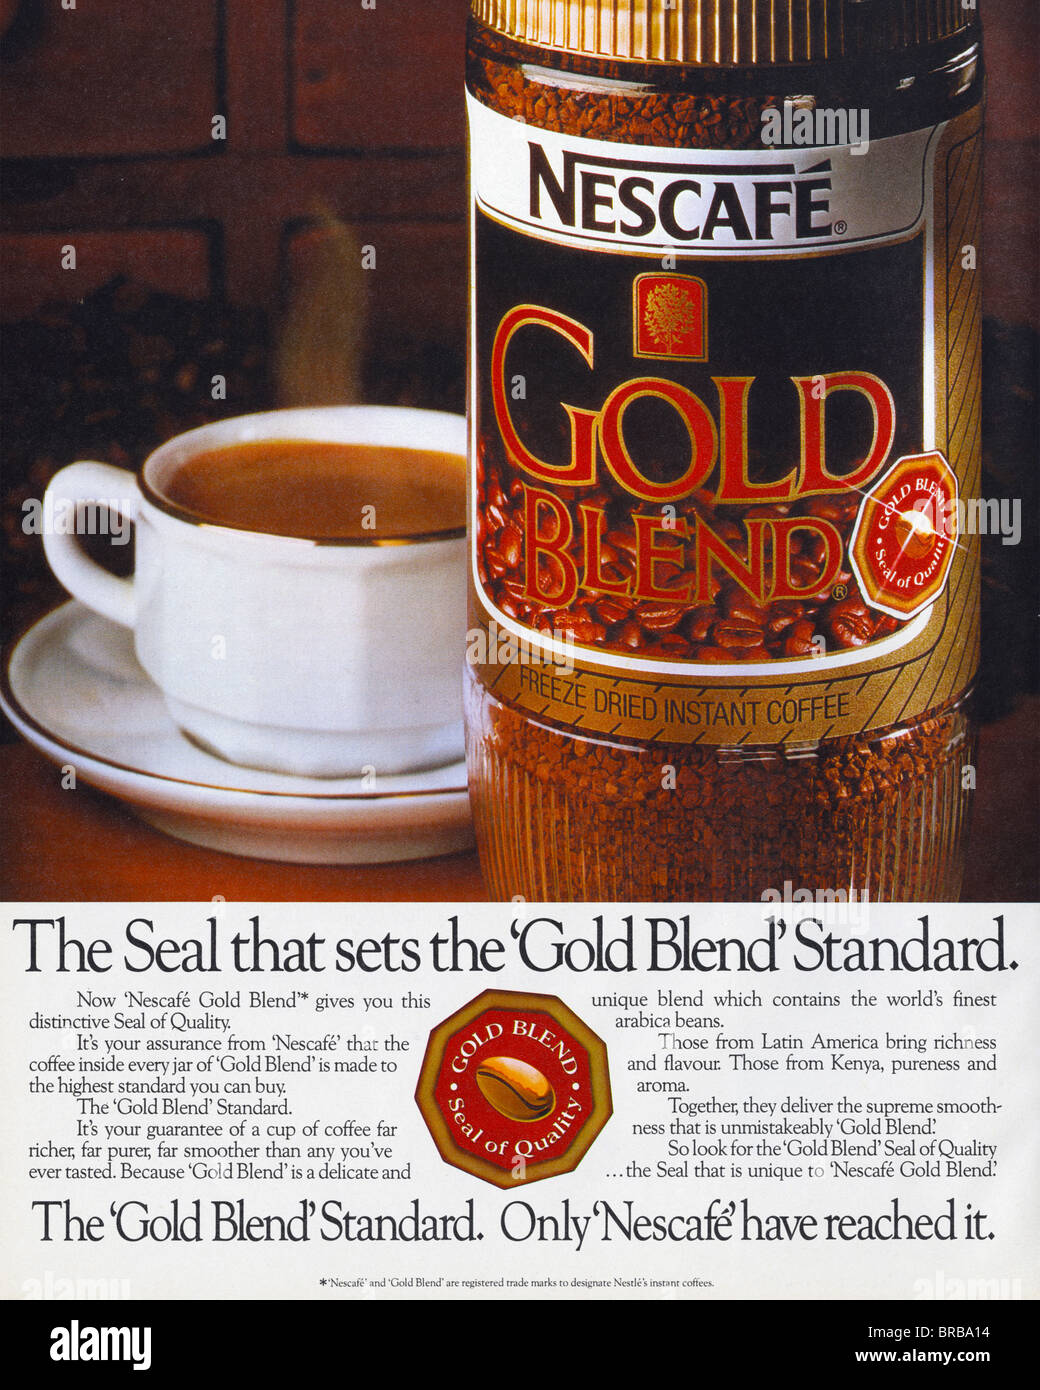 https://c8.alamy.com/comp/BRBA14/colour-magazine-advertisement-for-nescafe-gold-blend-instant-coffee-BRBA14.jpg